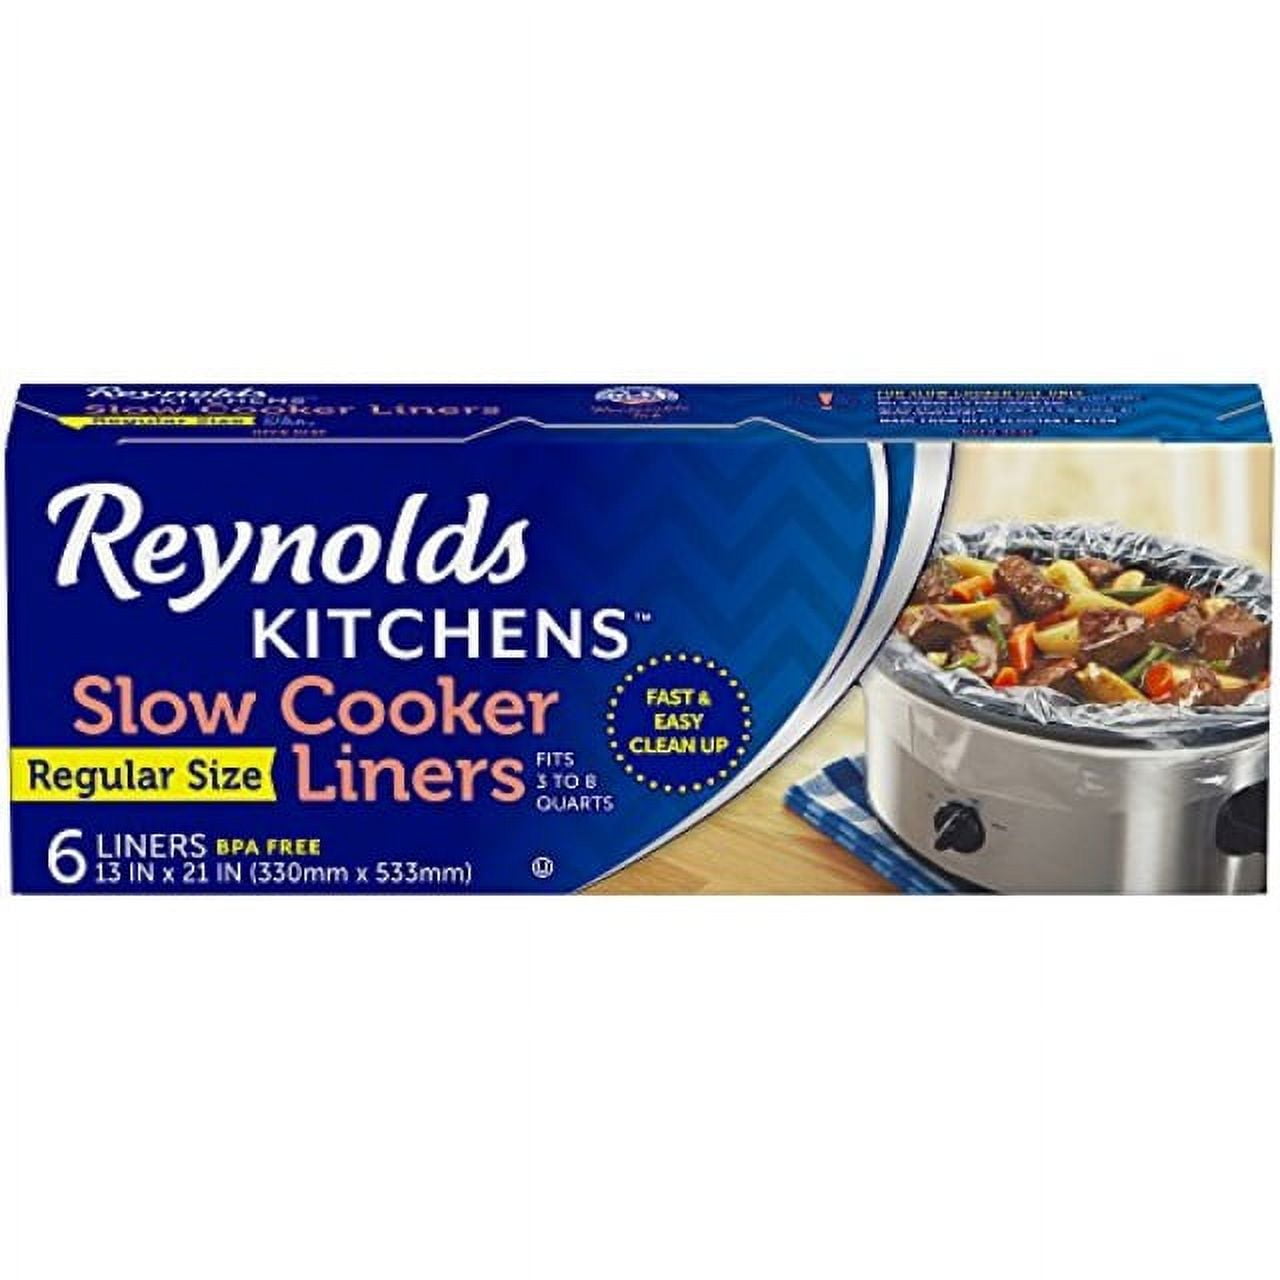 SMARTAKE Slow Cooker Liners, Crock Pot Liners 13x 15 Crockpot